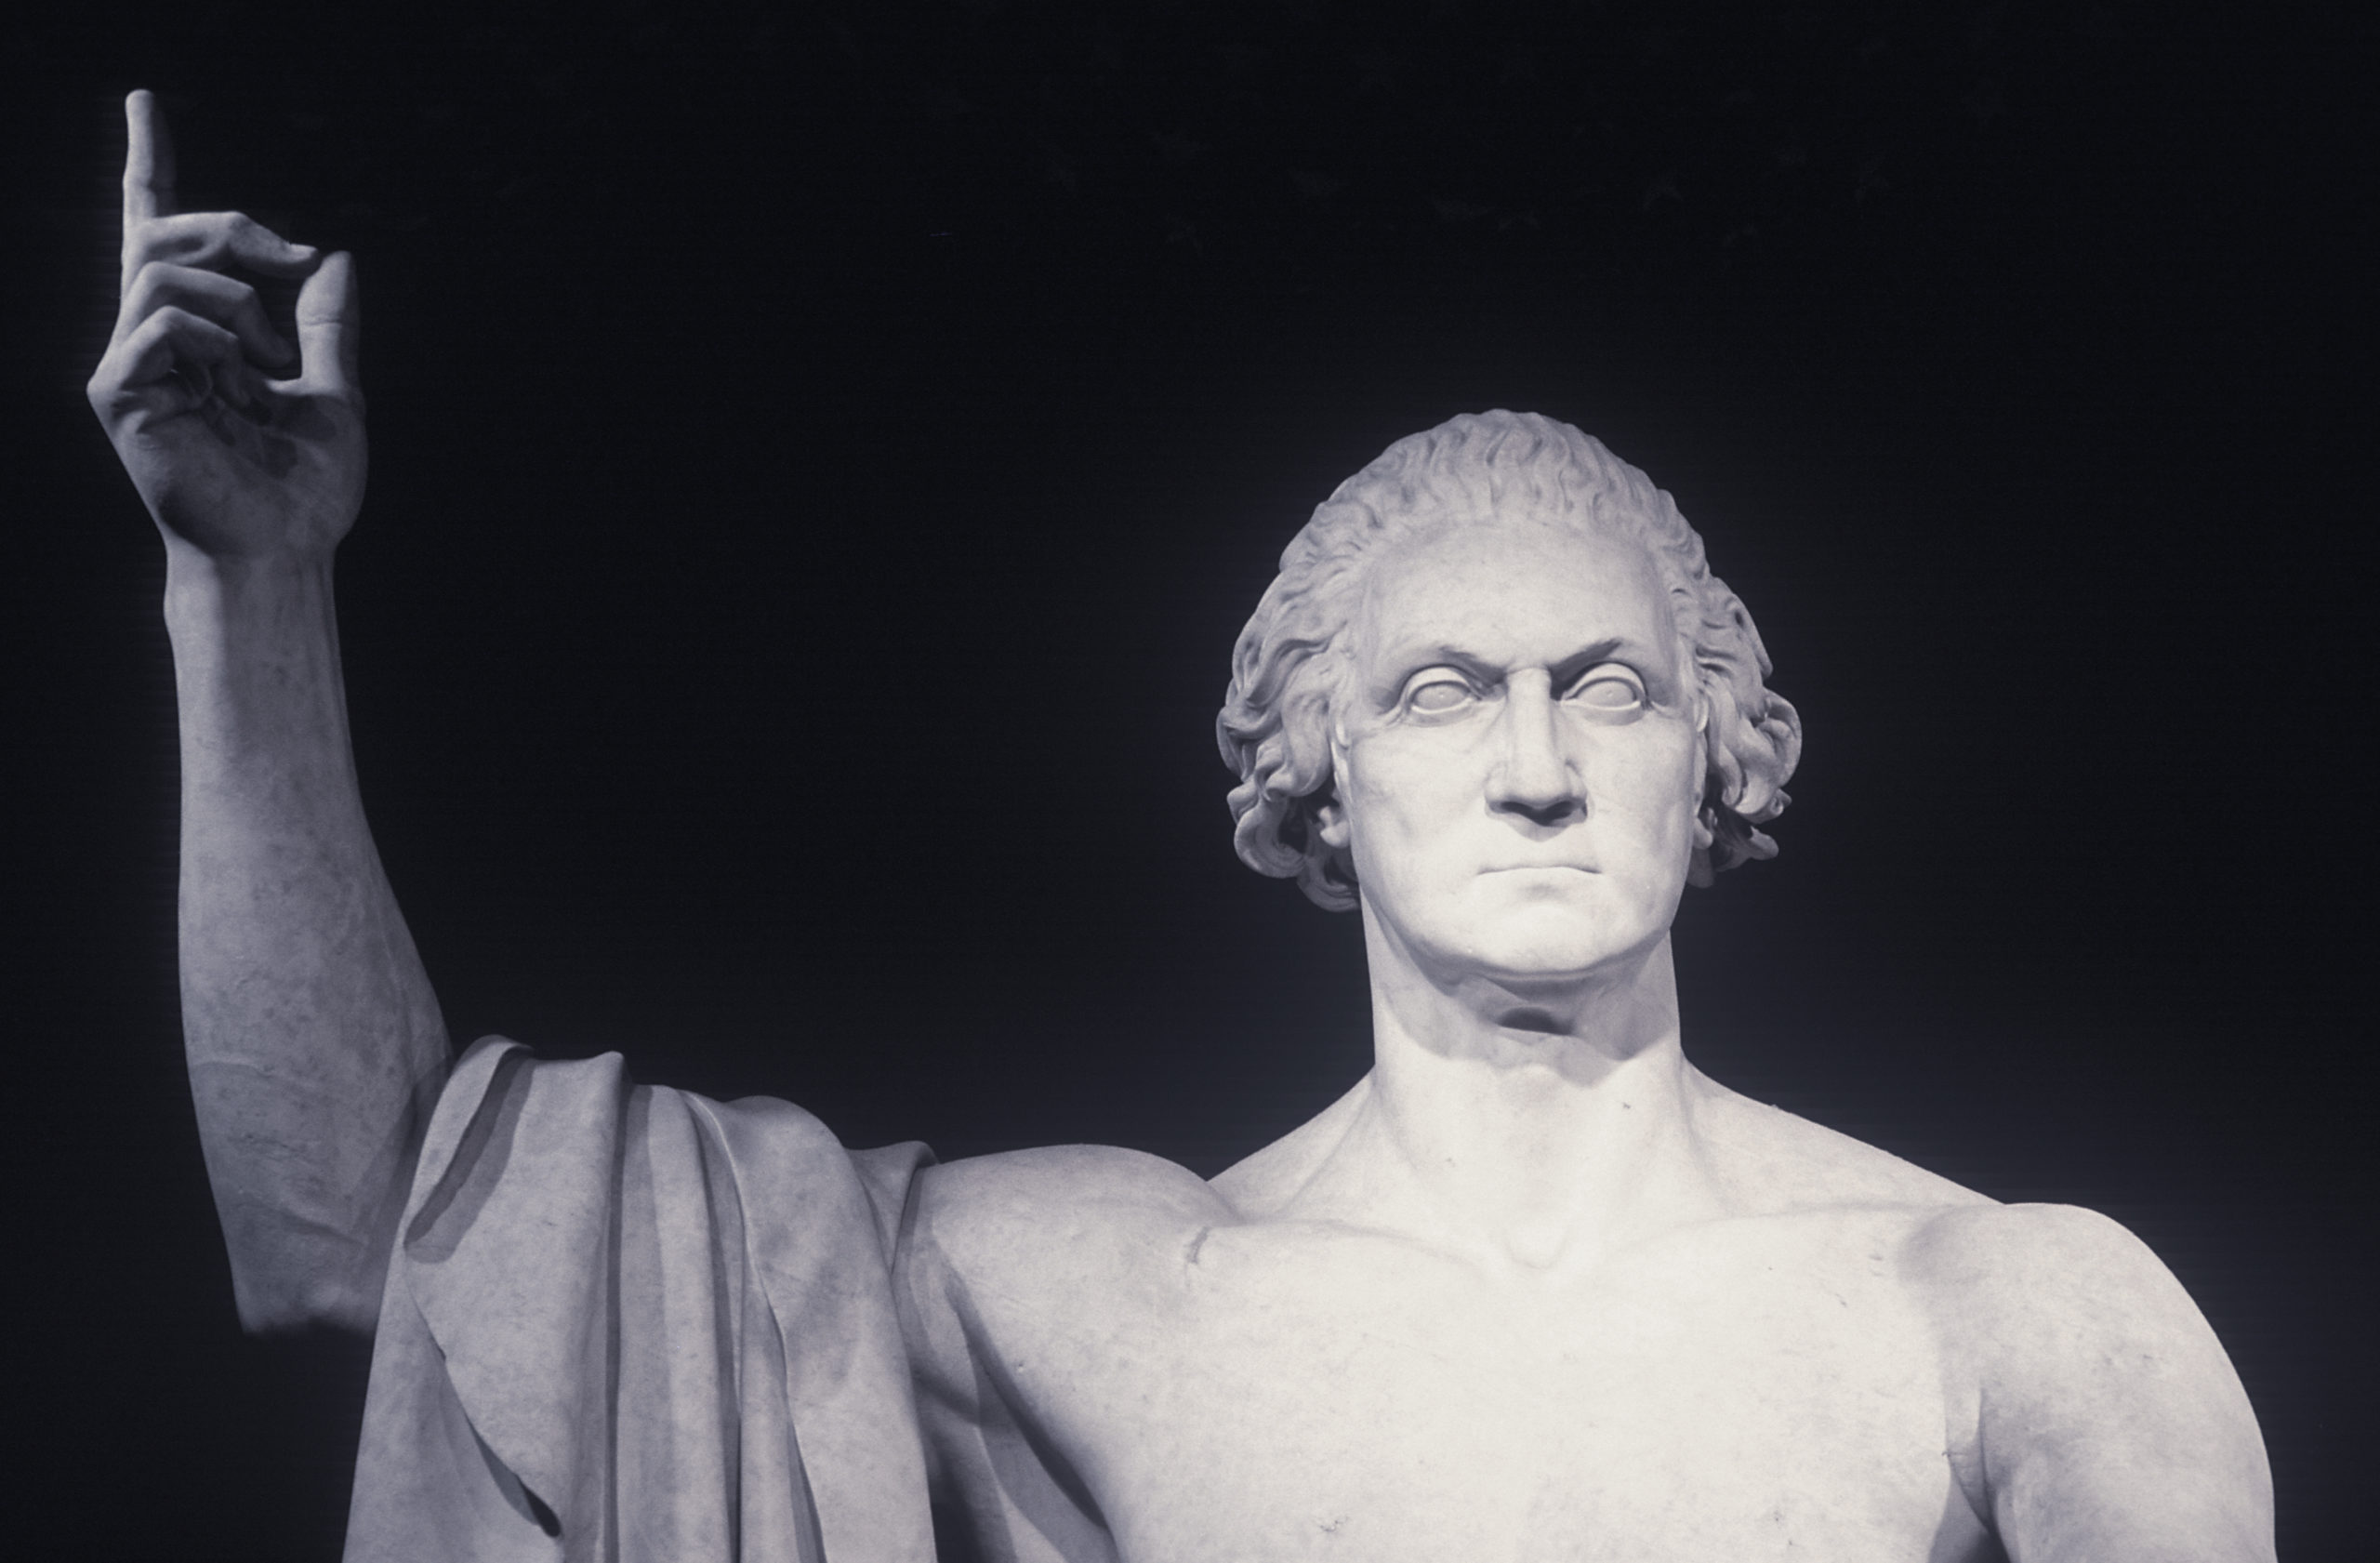 Sculpture of George Washington